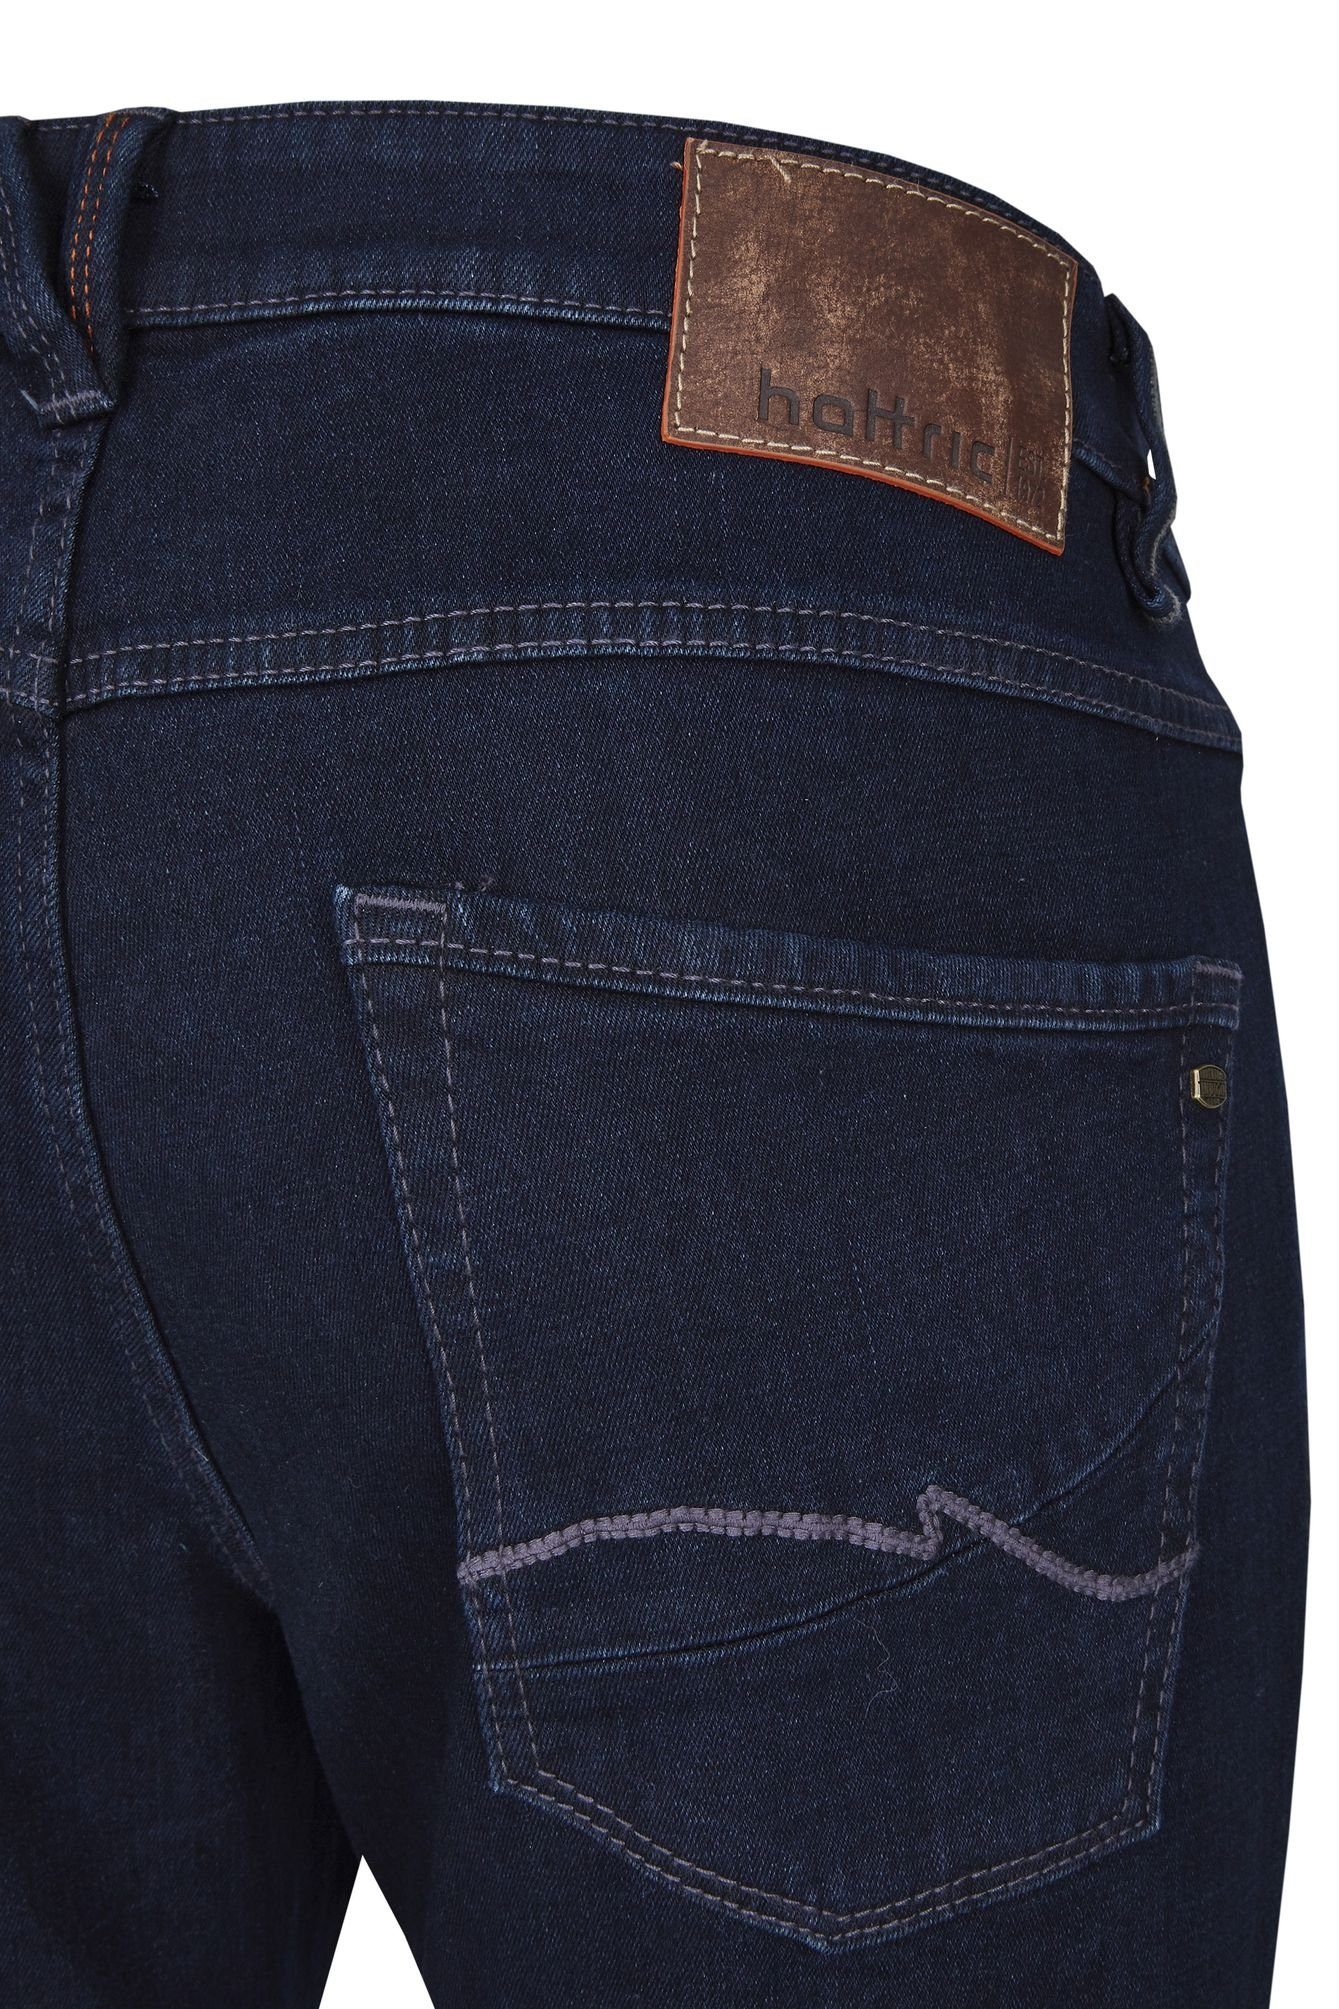 5-Pocket-Jeans 688495-9690 (44) Hattric raw